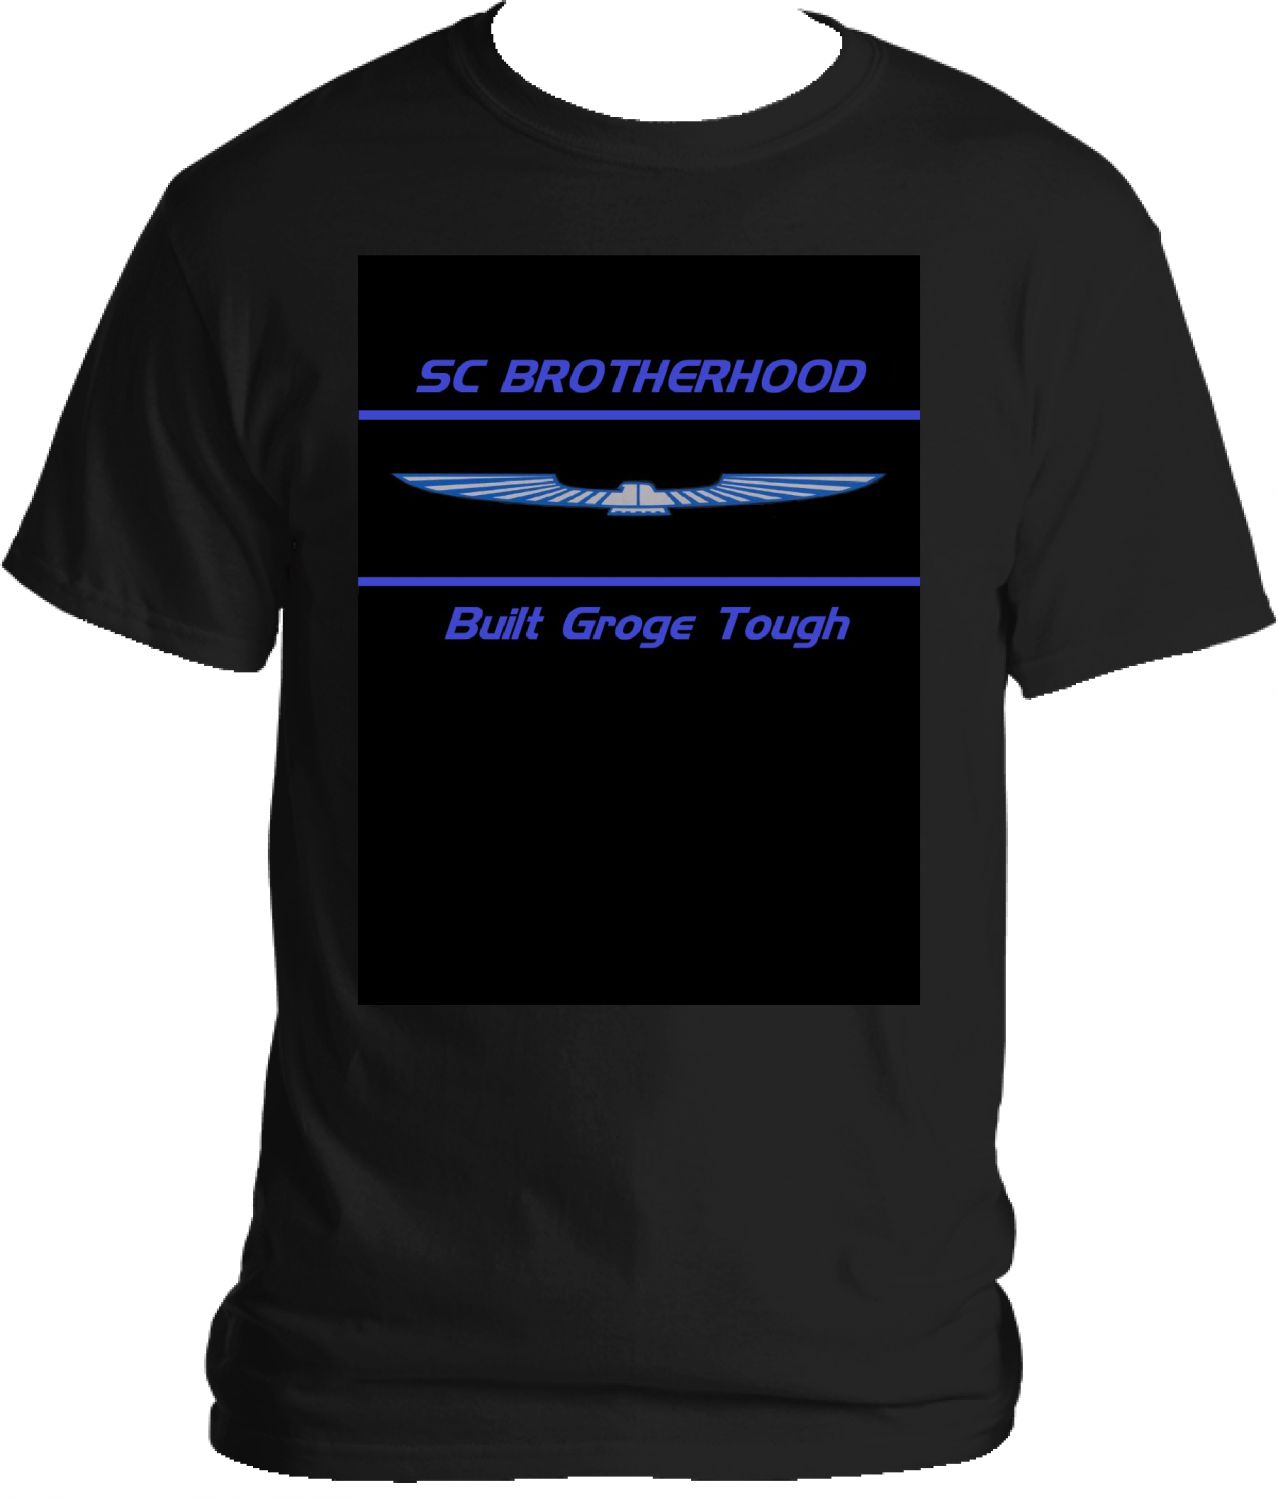 SC Brotherhood